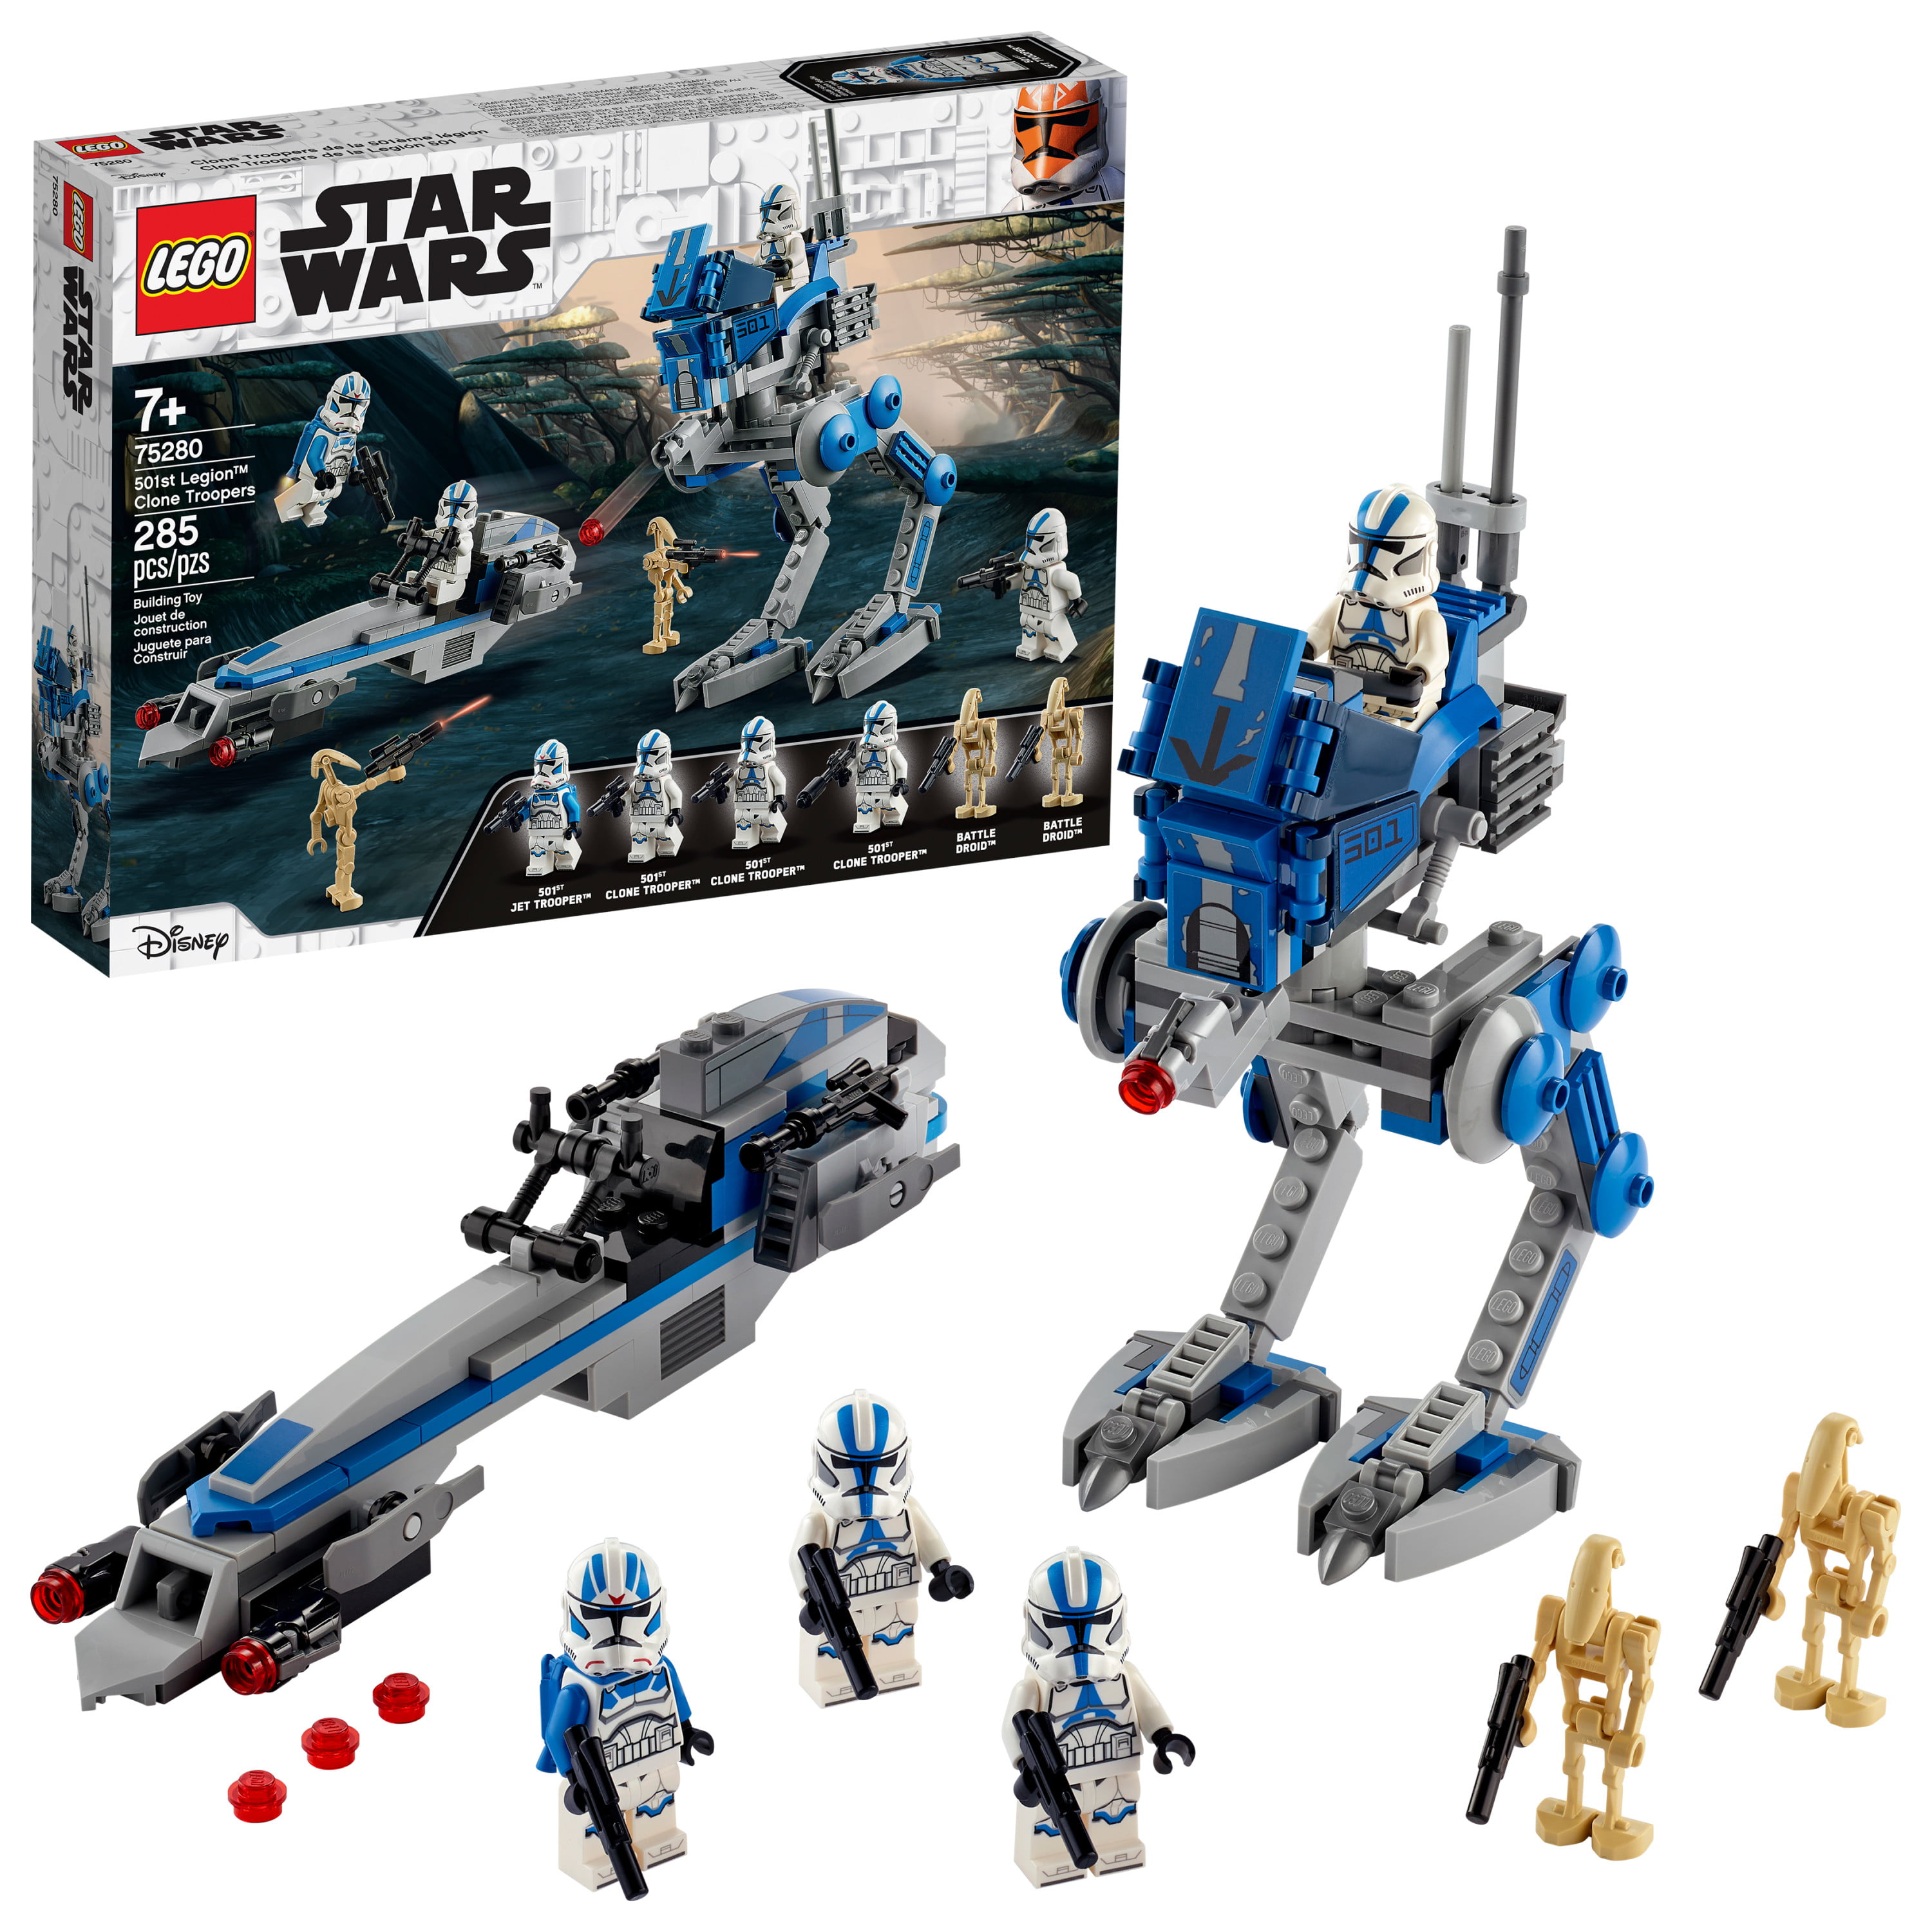 Lego ® set 75280 Disney Star Wars 501st legión Clone Troopers